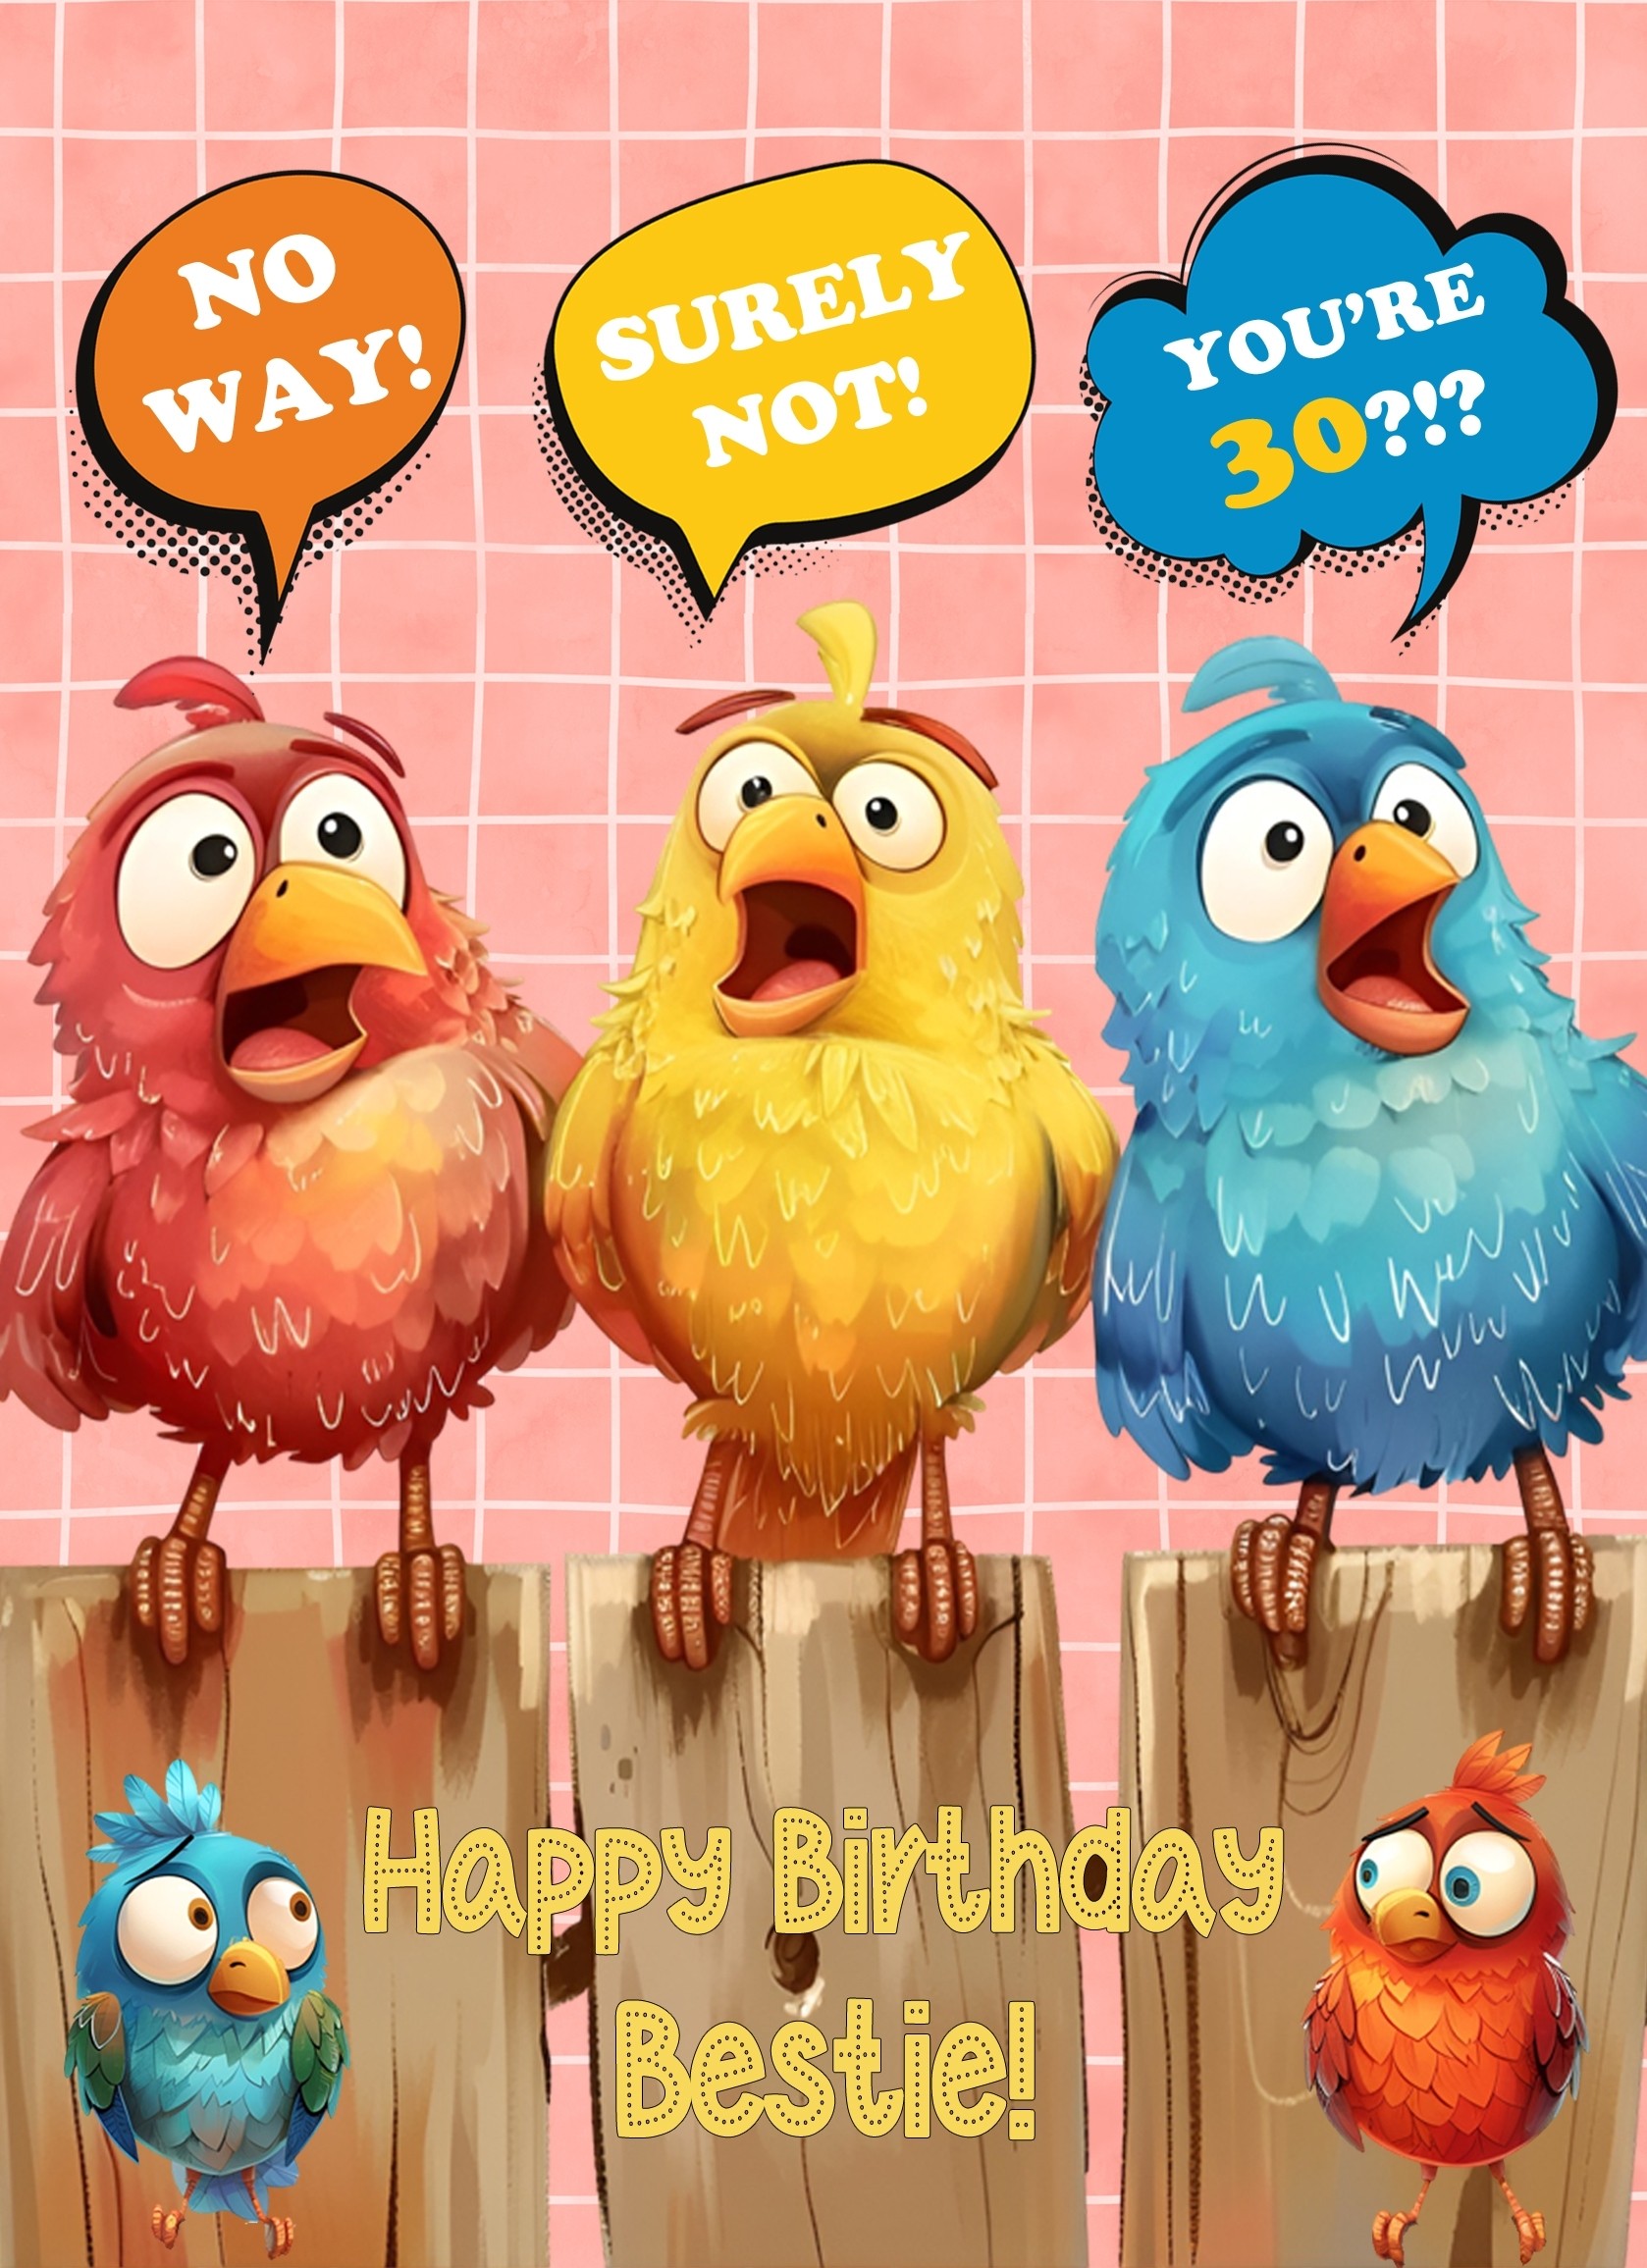 Bestie 30th Birthday Card (Funny Birds Surprised)